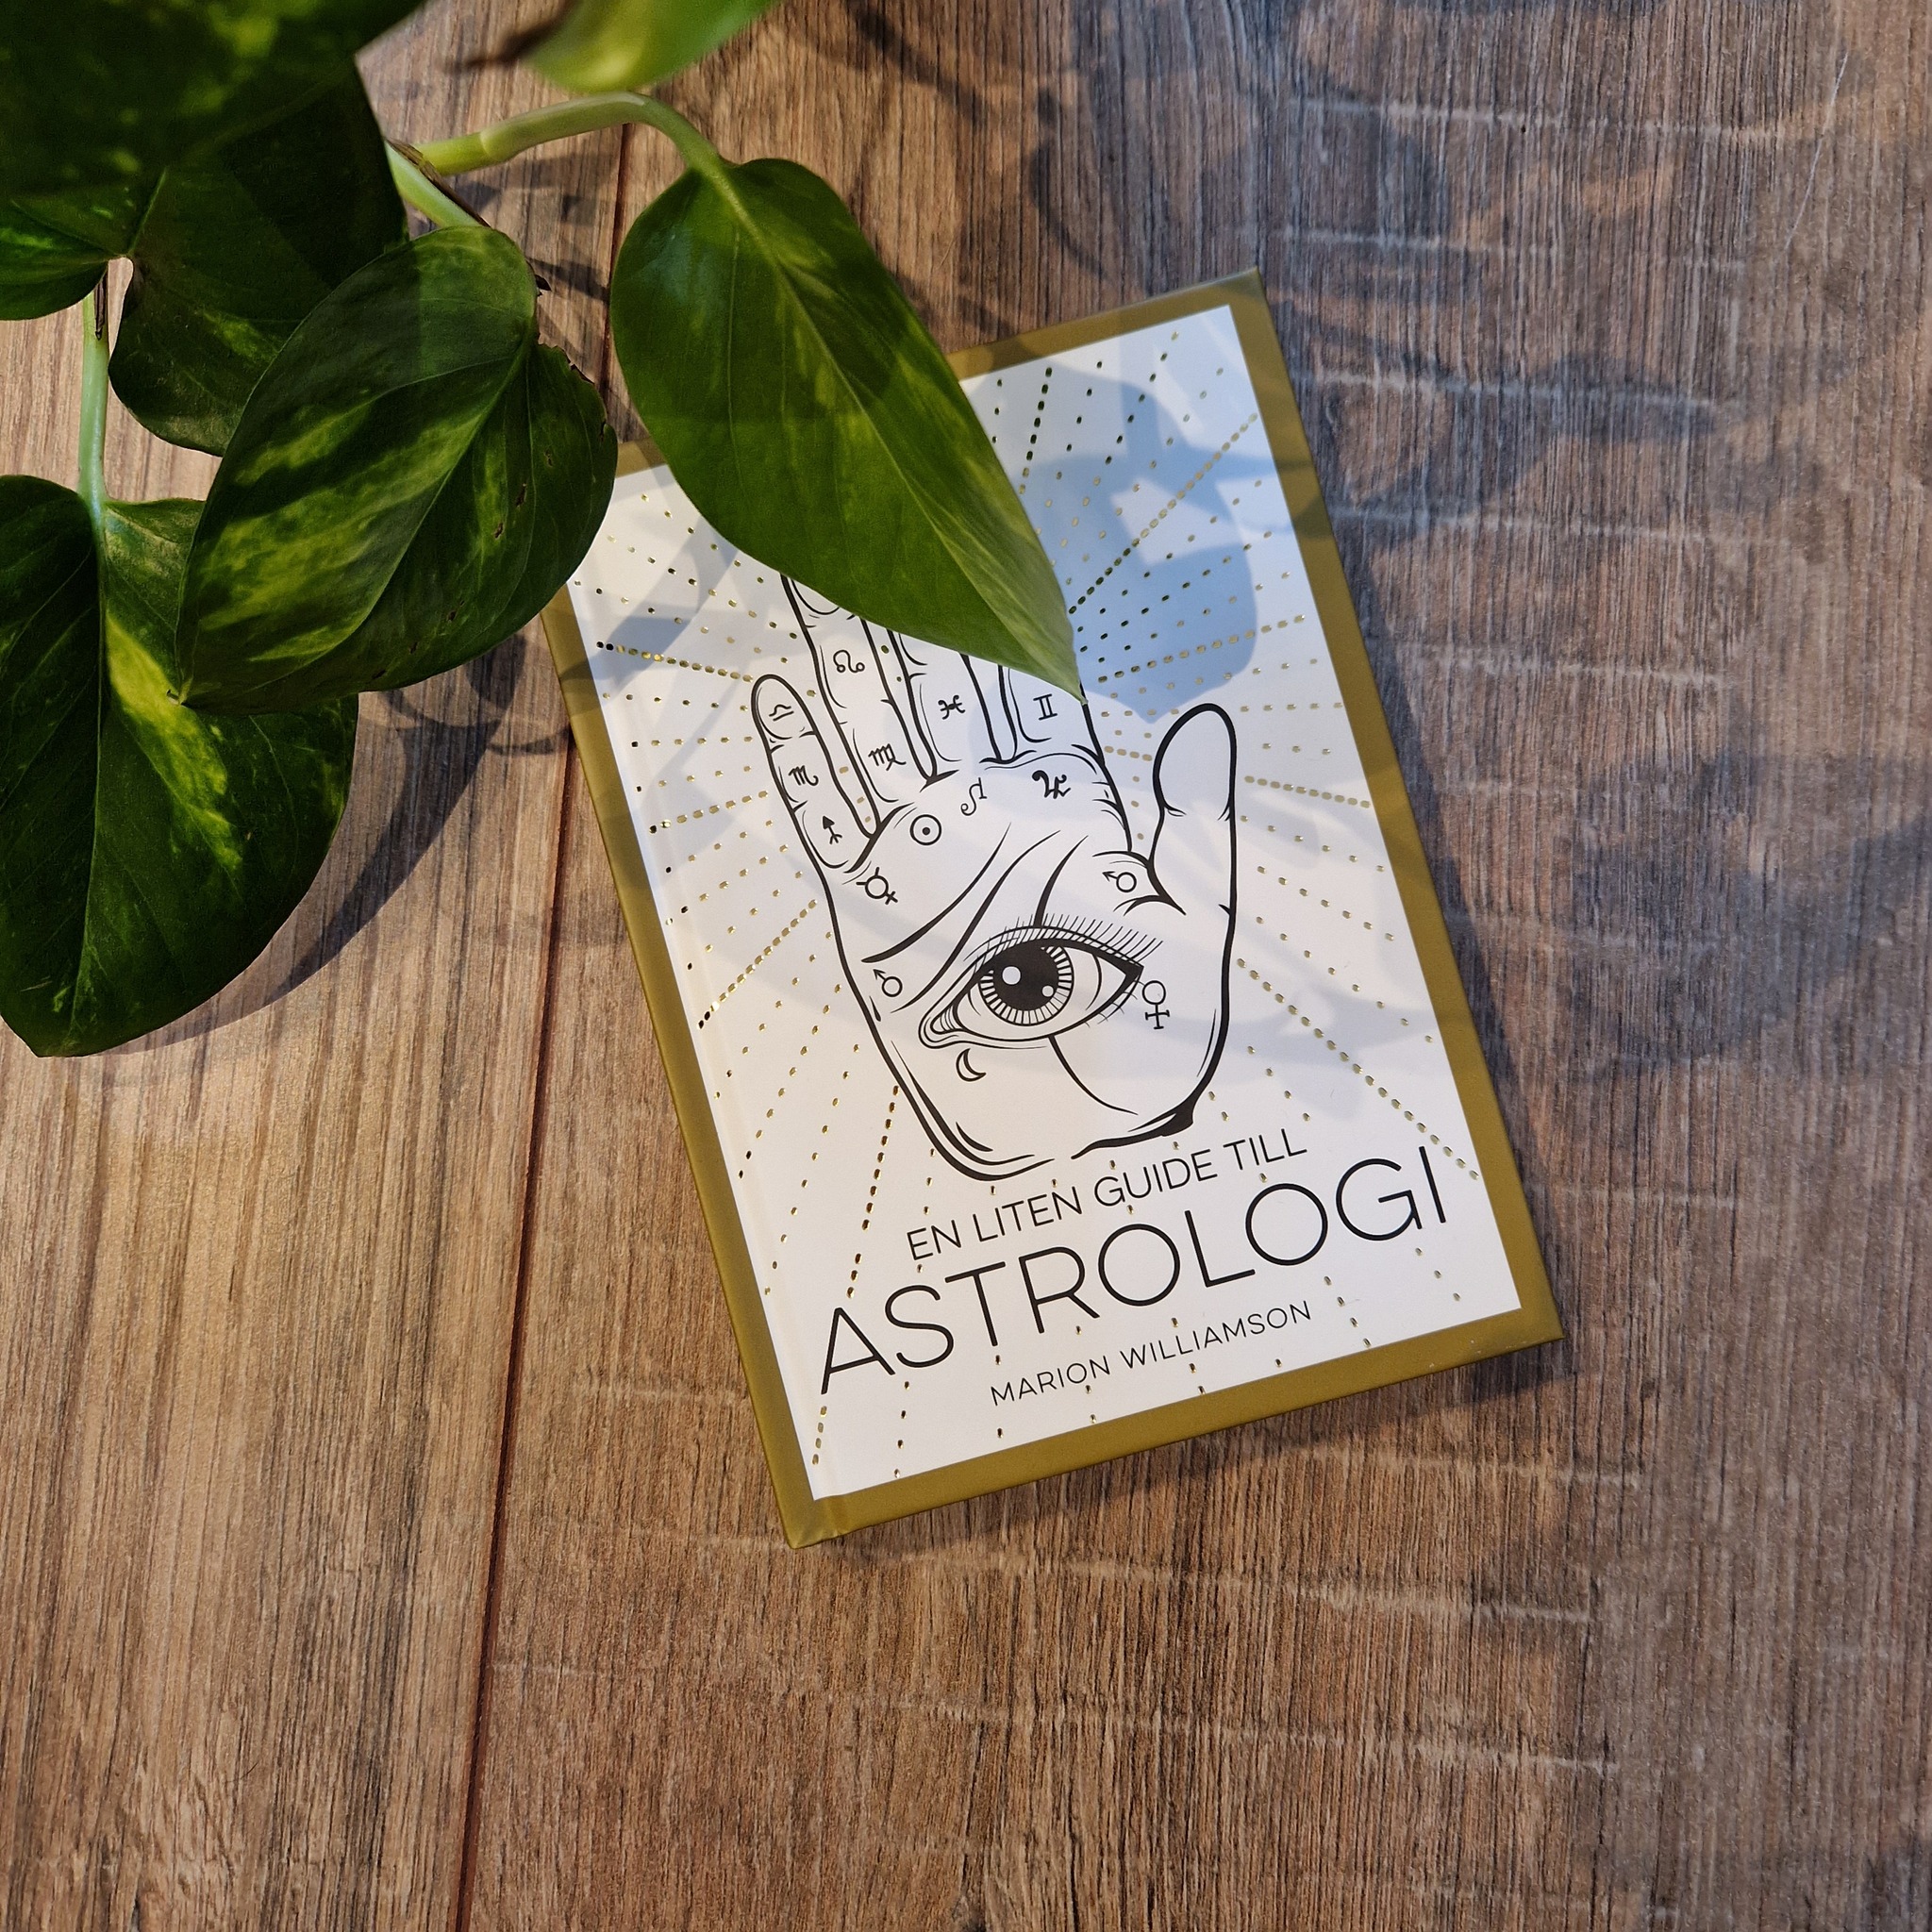 En liten guide till astrologi